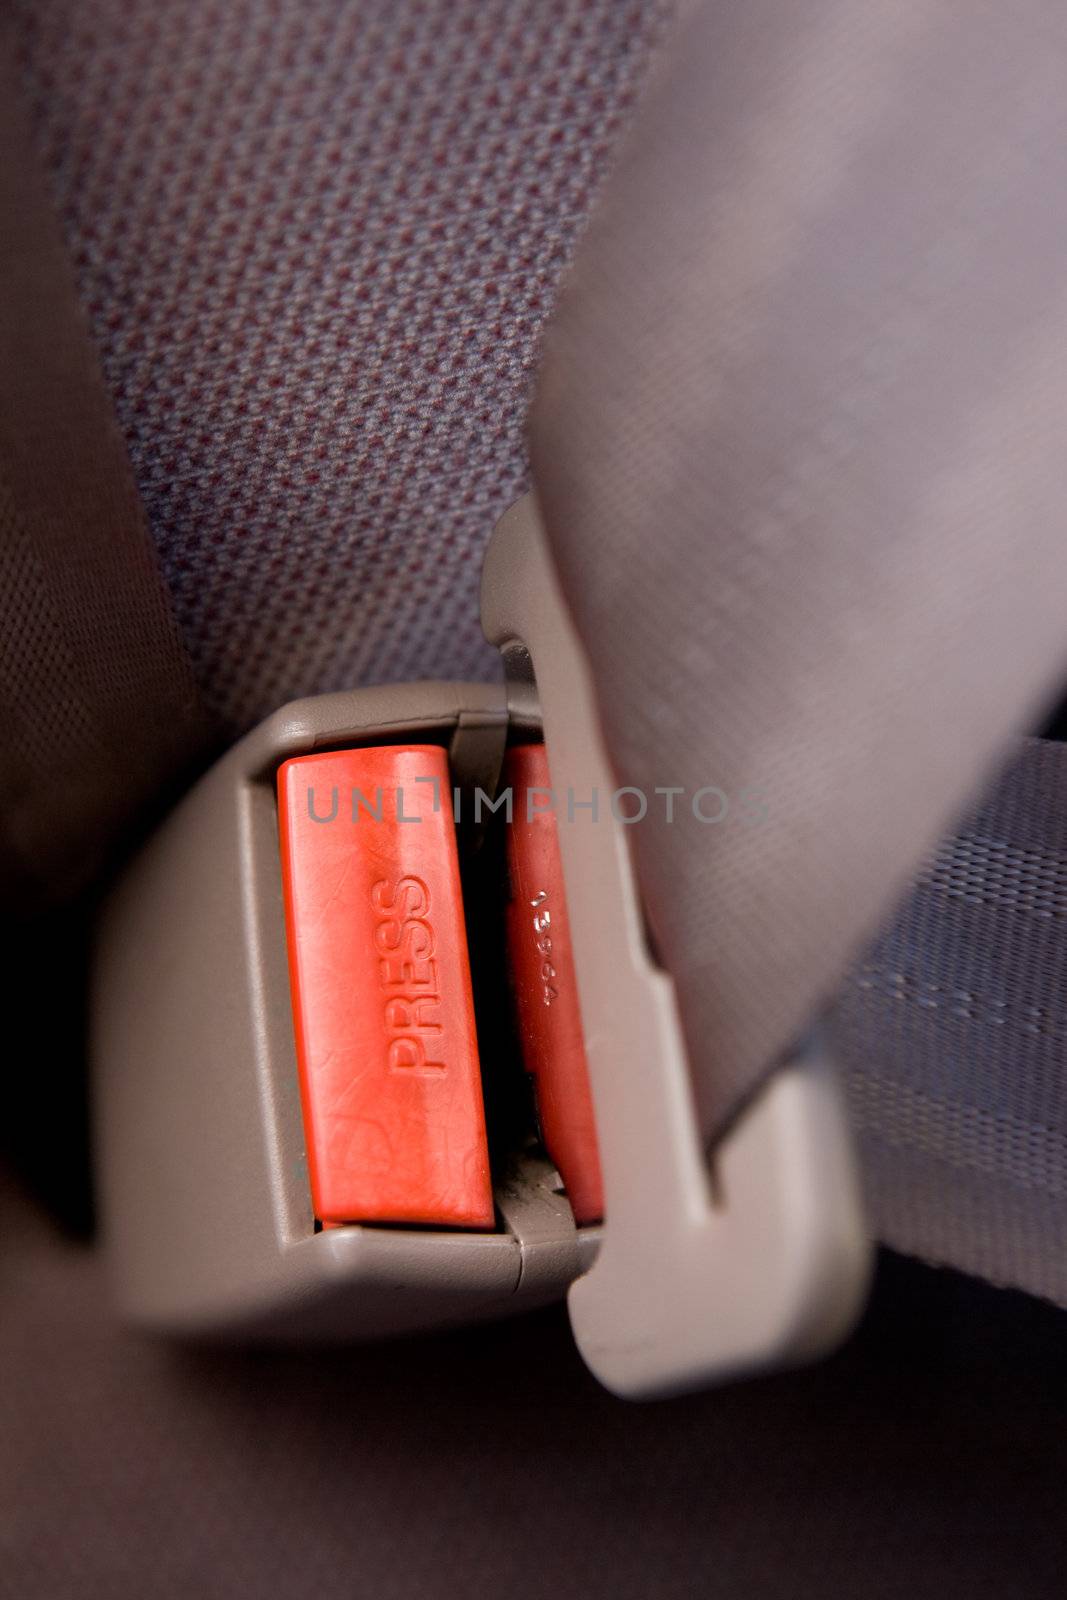 Press Seatbelt Detail by leaf